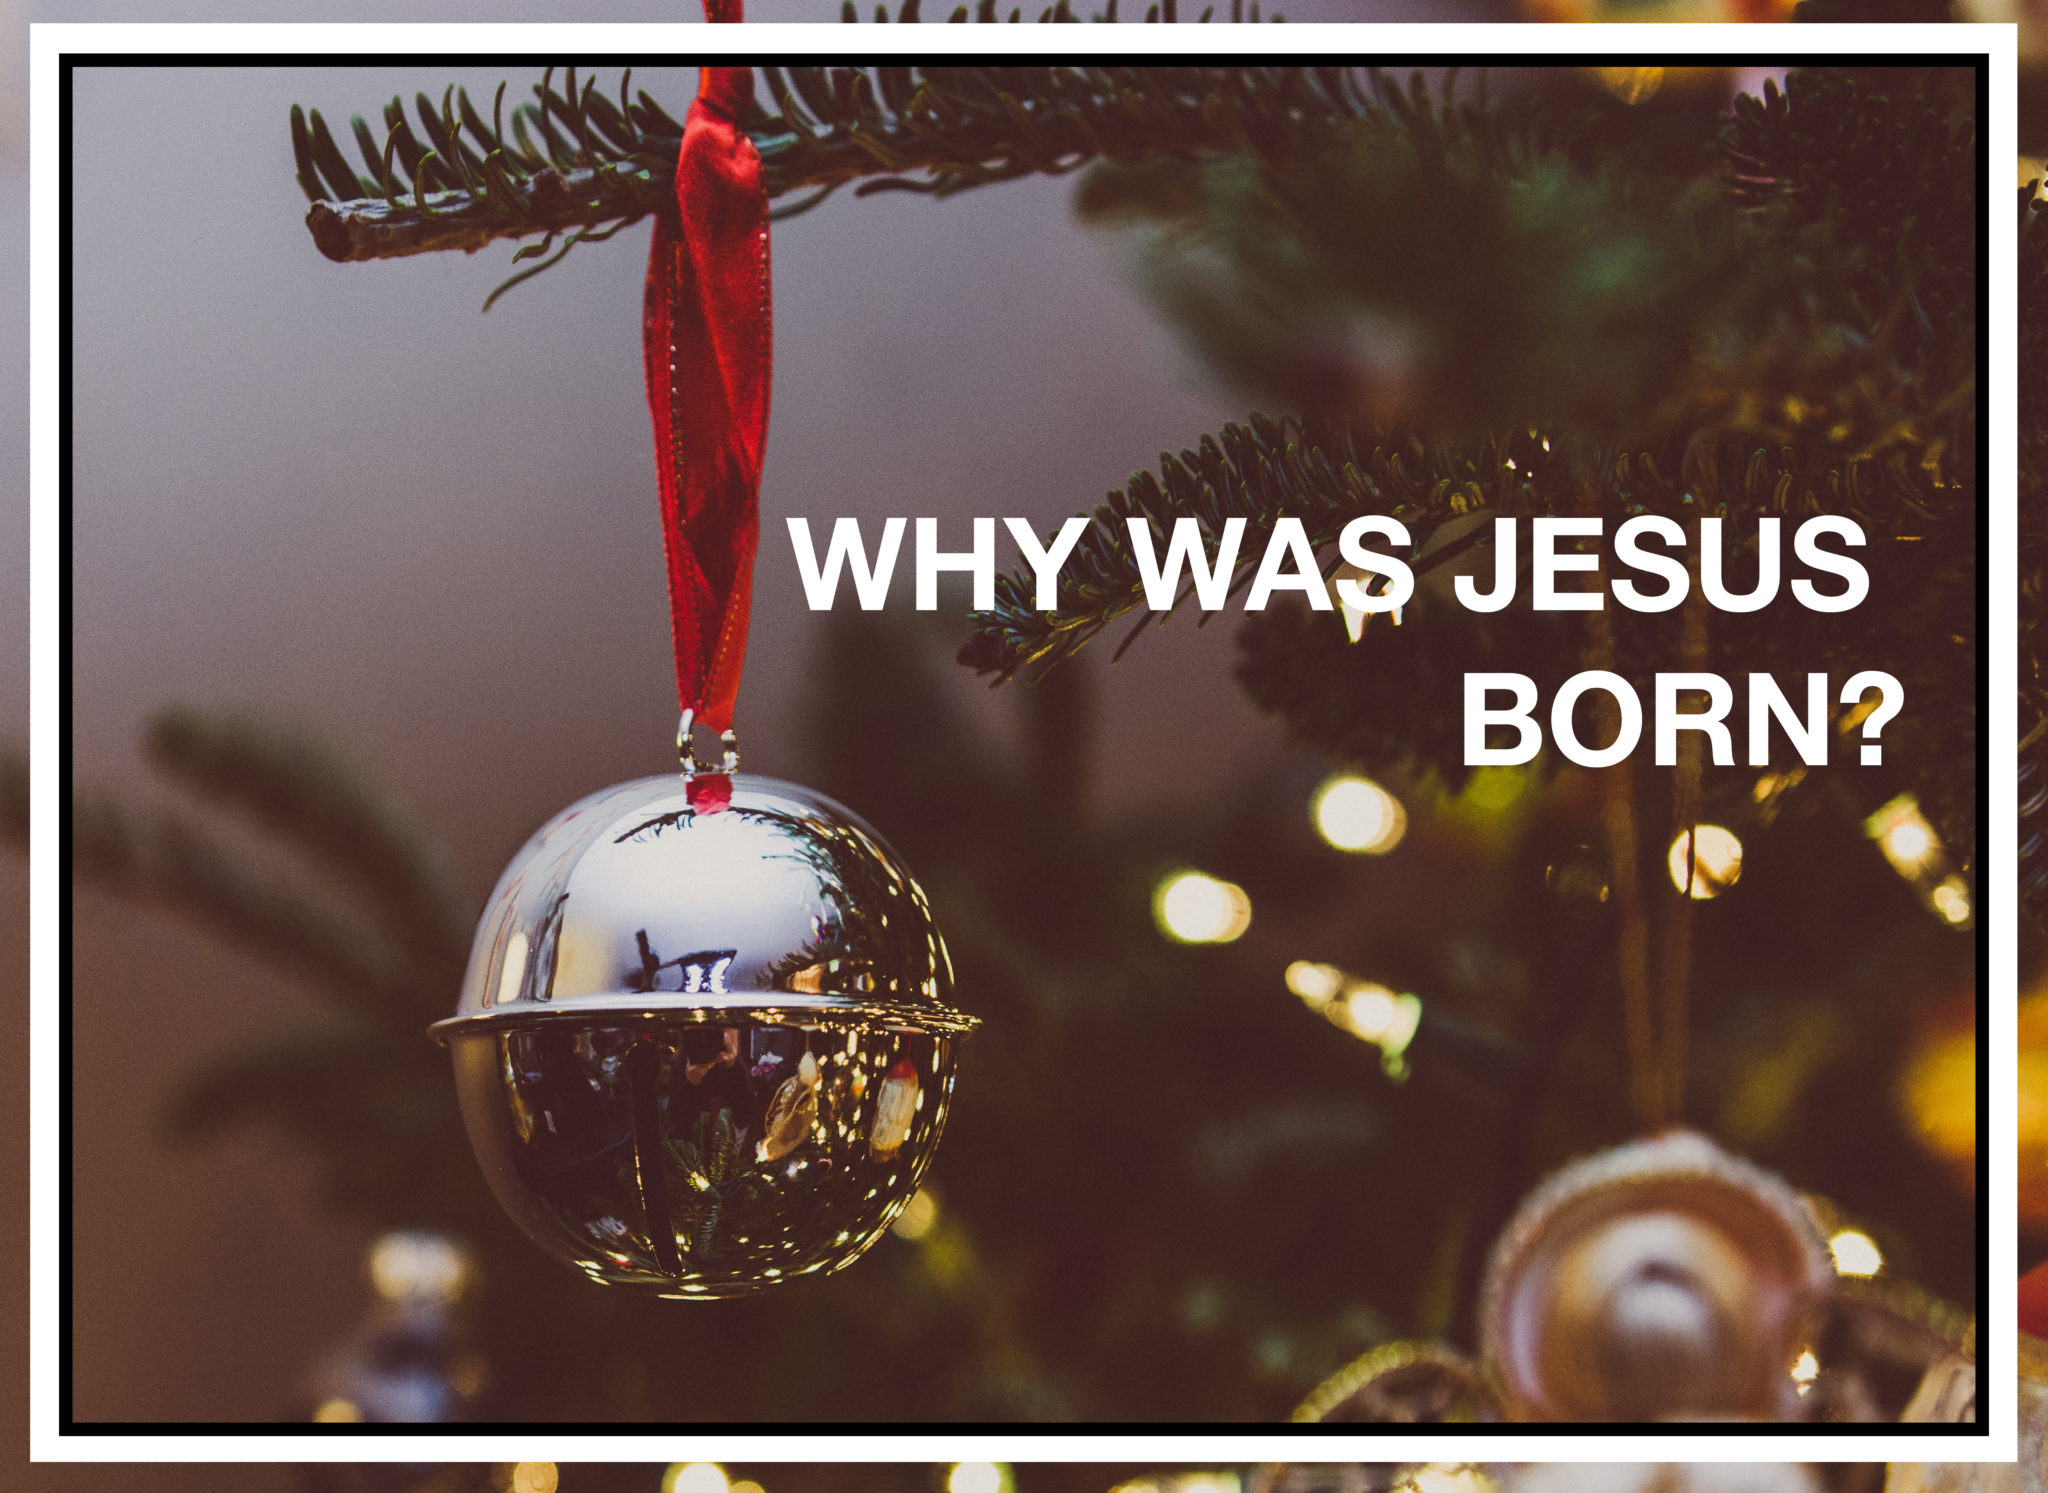 WHY WAS JESUS BORN